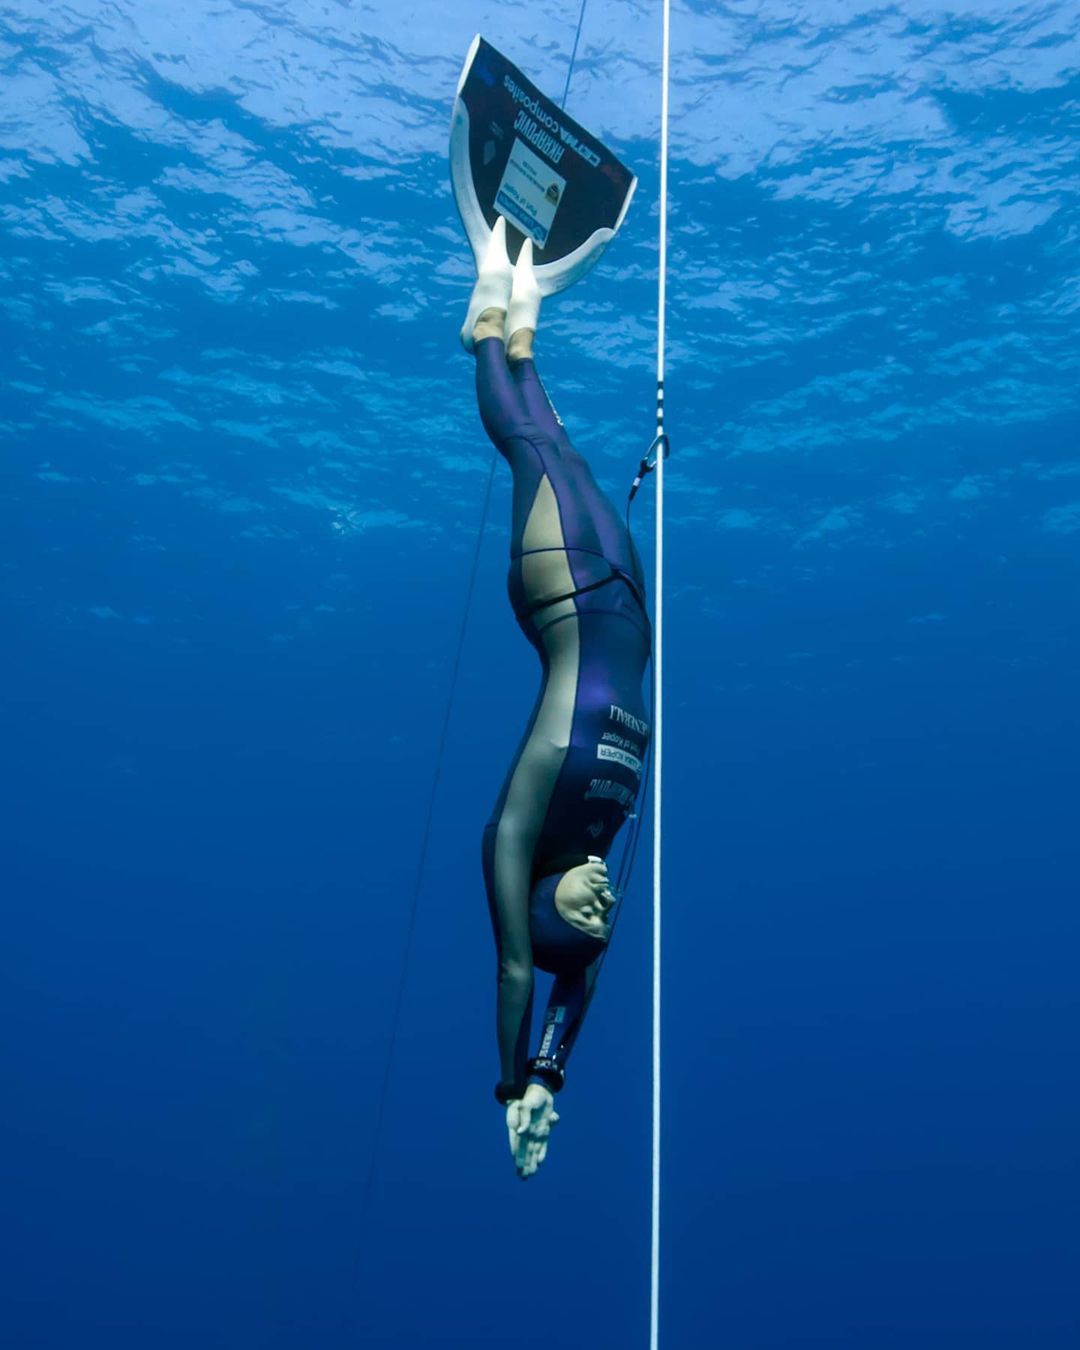 alenka artnik free diving